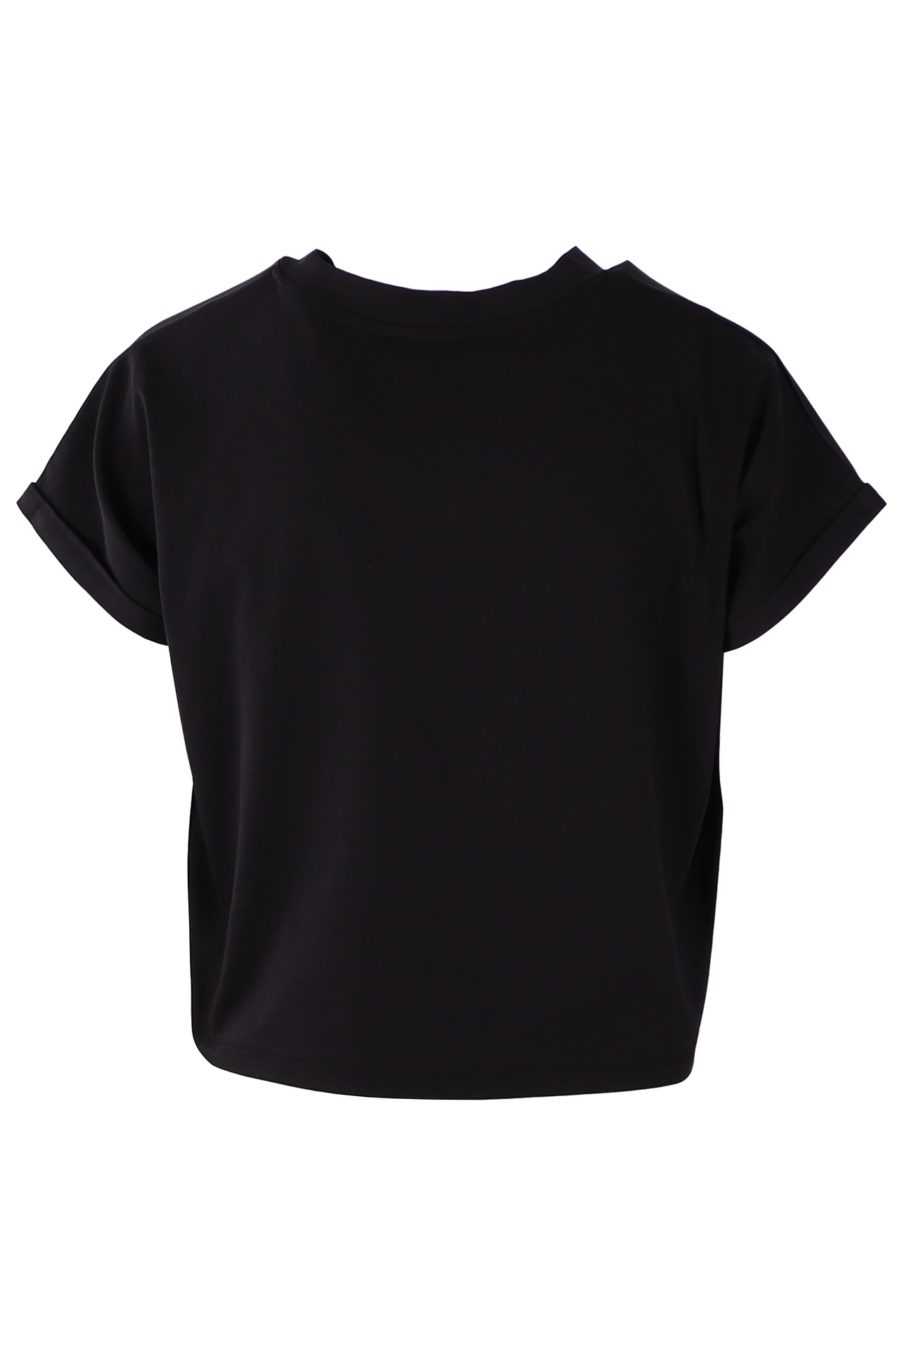 Camiseta corta Balmain negra con logotipo pequeño - fc1a3e27cebc87179f13cbd8178bc6b782646bba